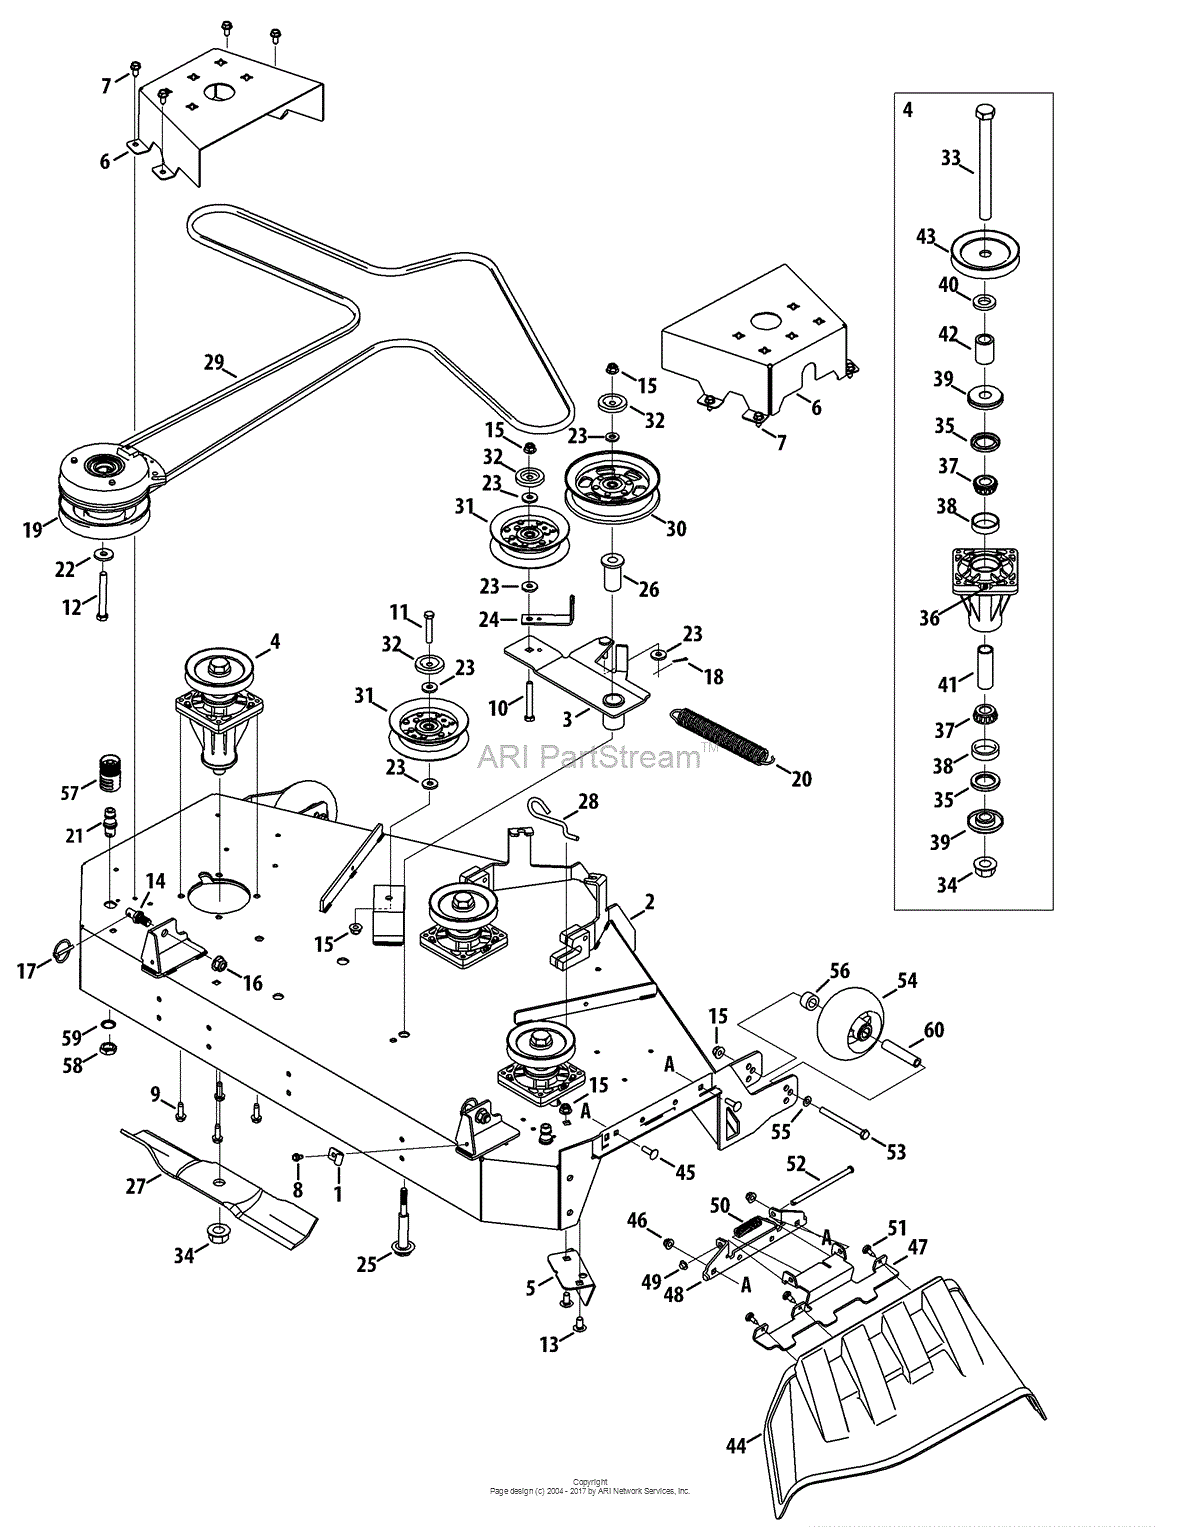 Poulan Pro Riding Lawn Mower Parts Diagram